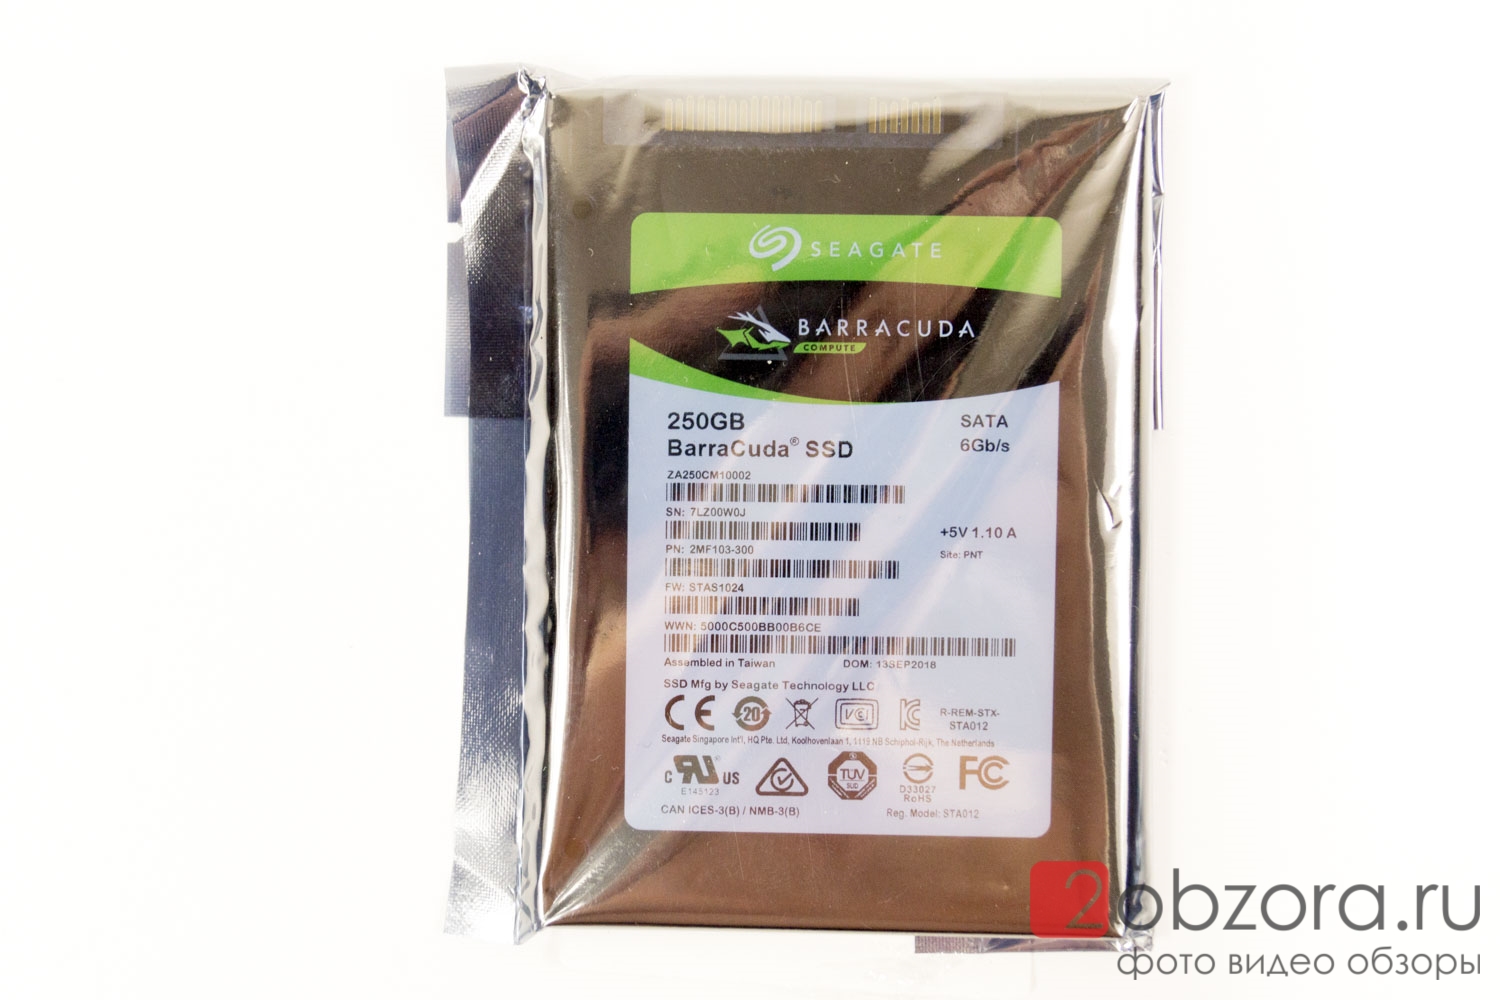 SSD диск SEAGATE Barracuda 250GB (ZA250CM10002)